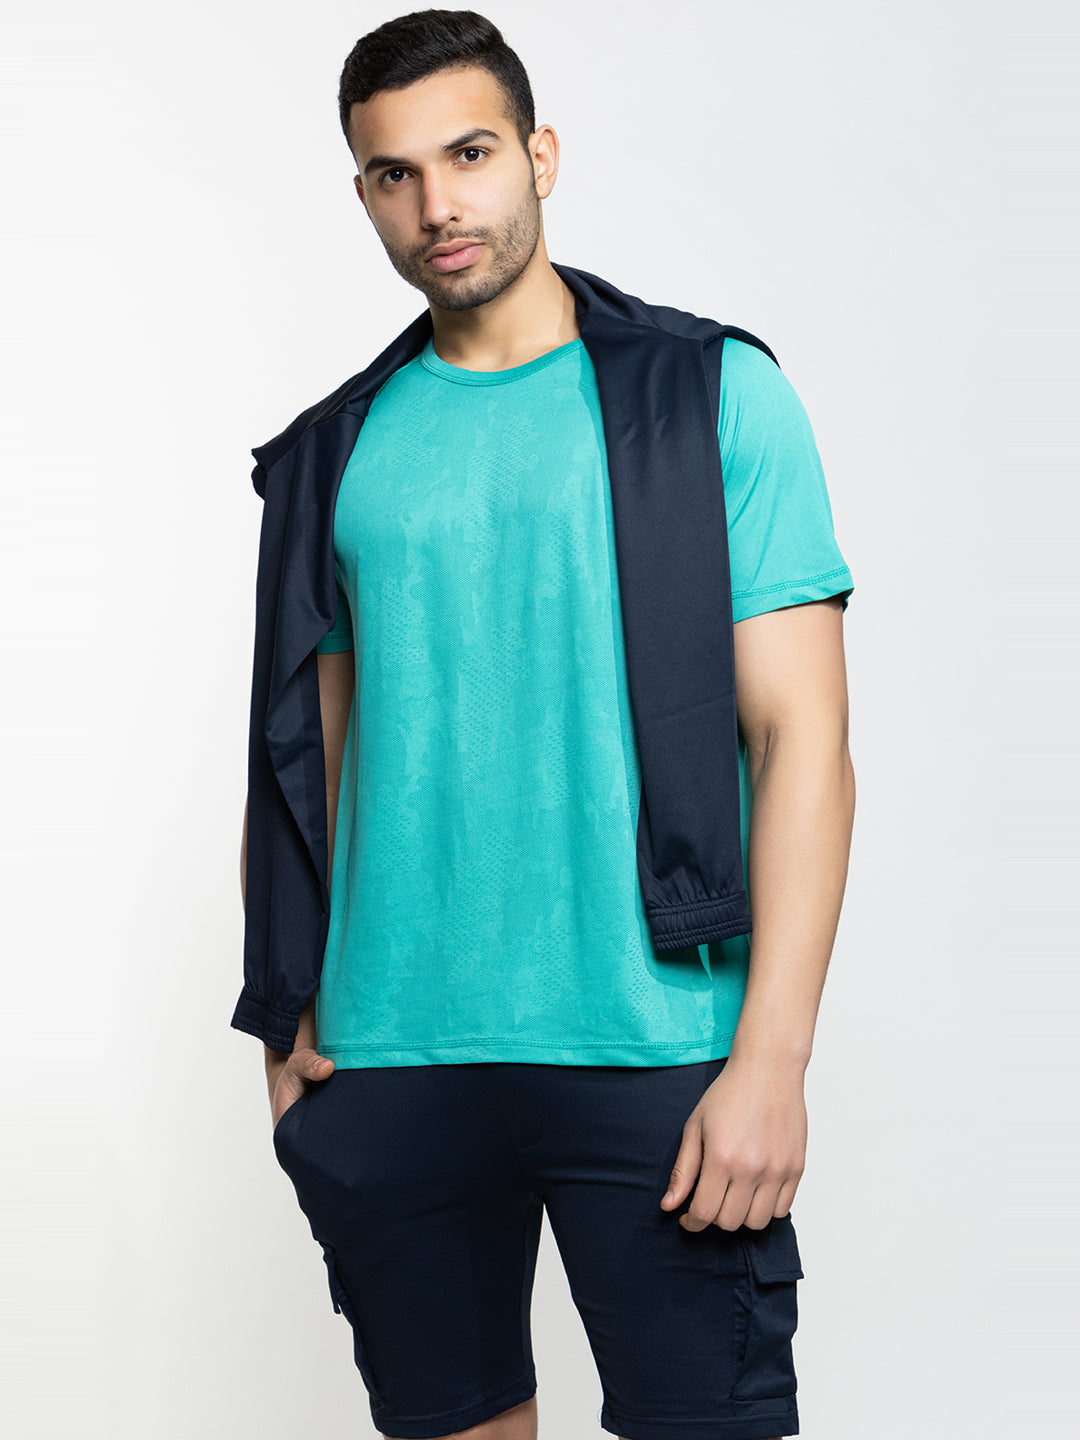 120 Camo Textured Dri-Fit Sports Tshirt I Turquoise Green